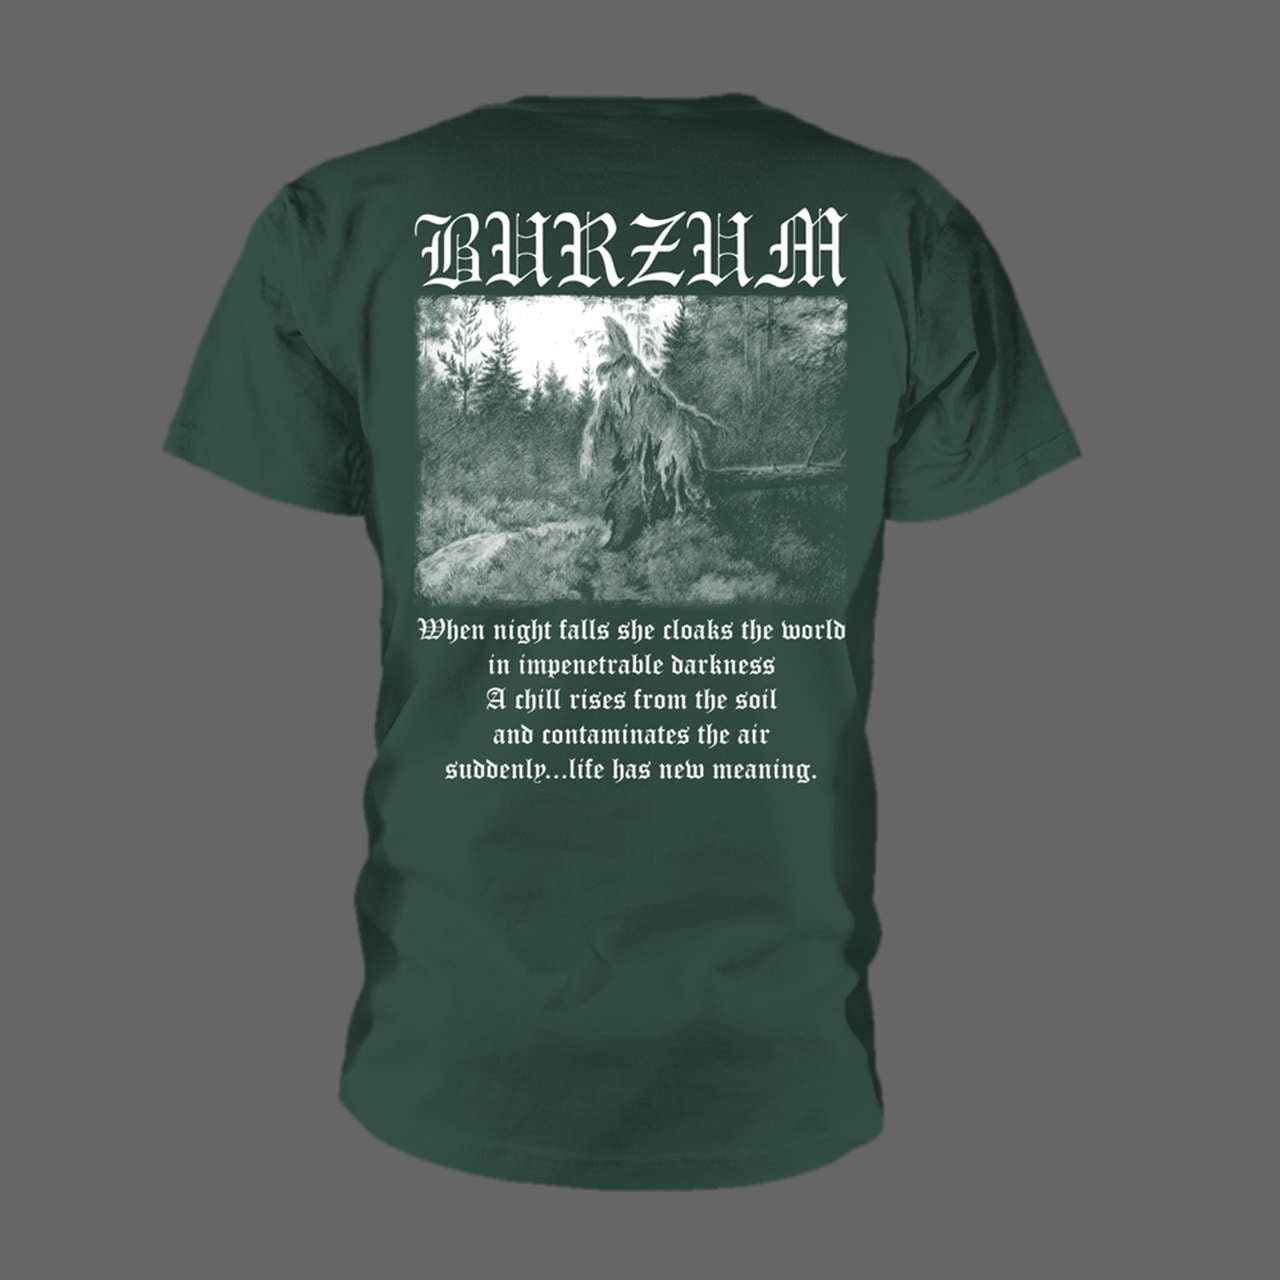 Burzum - Filosofem (Green) (T-Shirt)